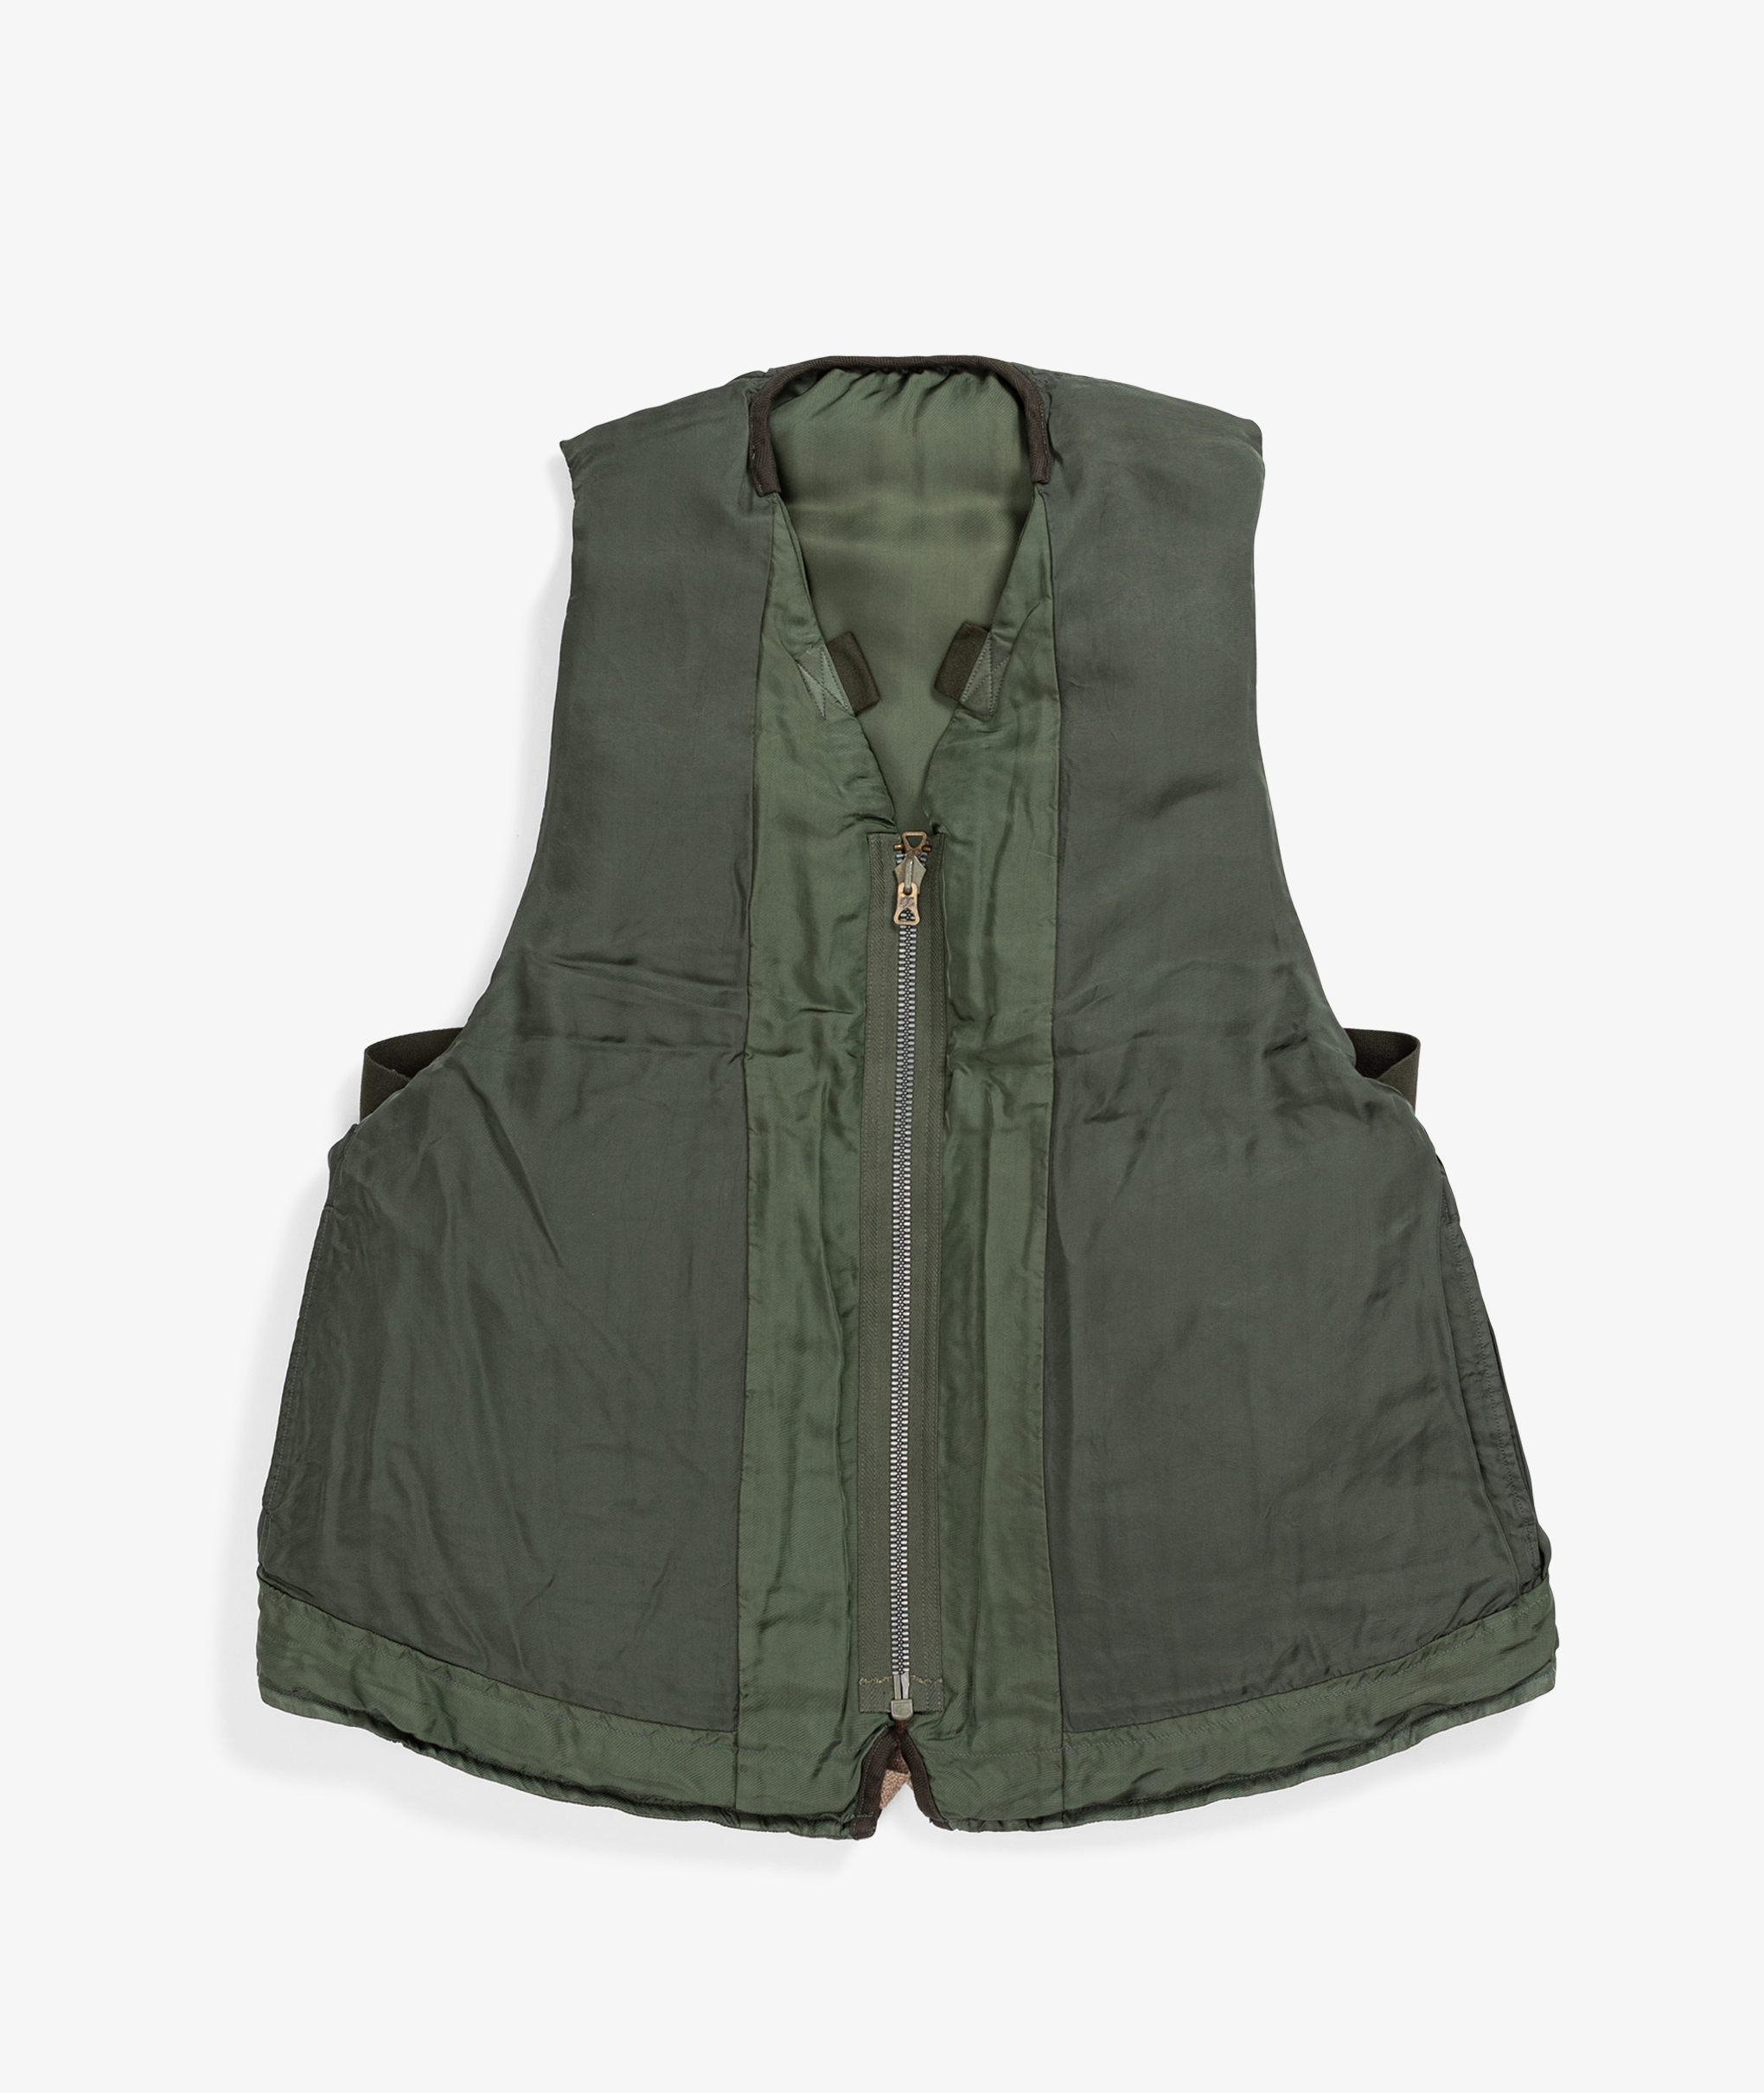 Visvim Harrier Reversible Down Vest in Khaki Mens Clothing Jackets Waistcoats and gilets for Men Green 